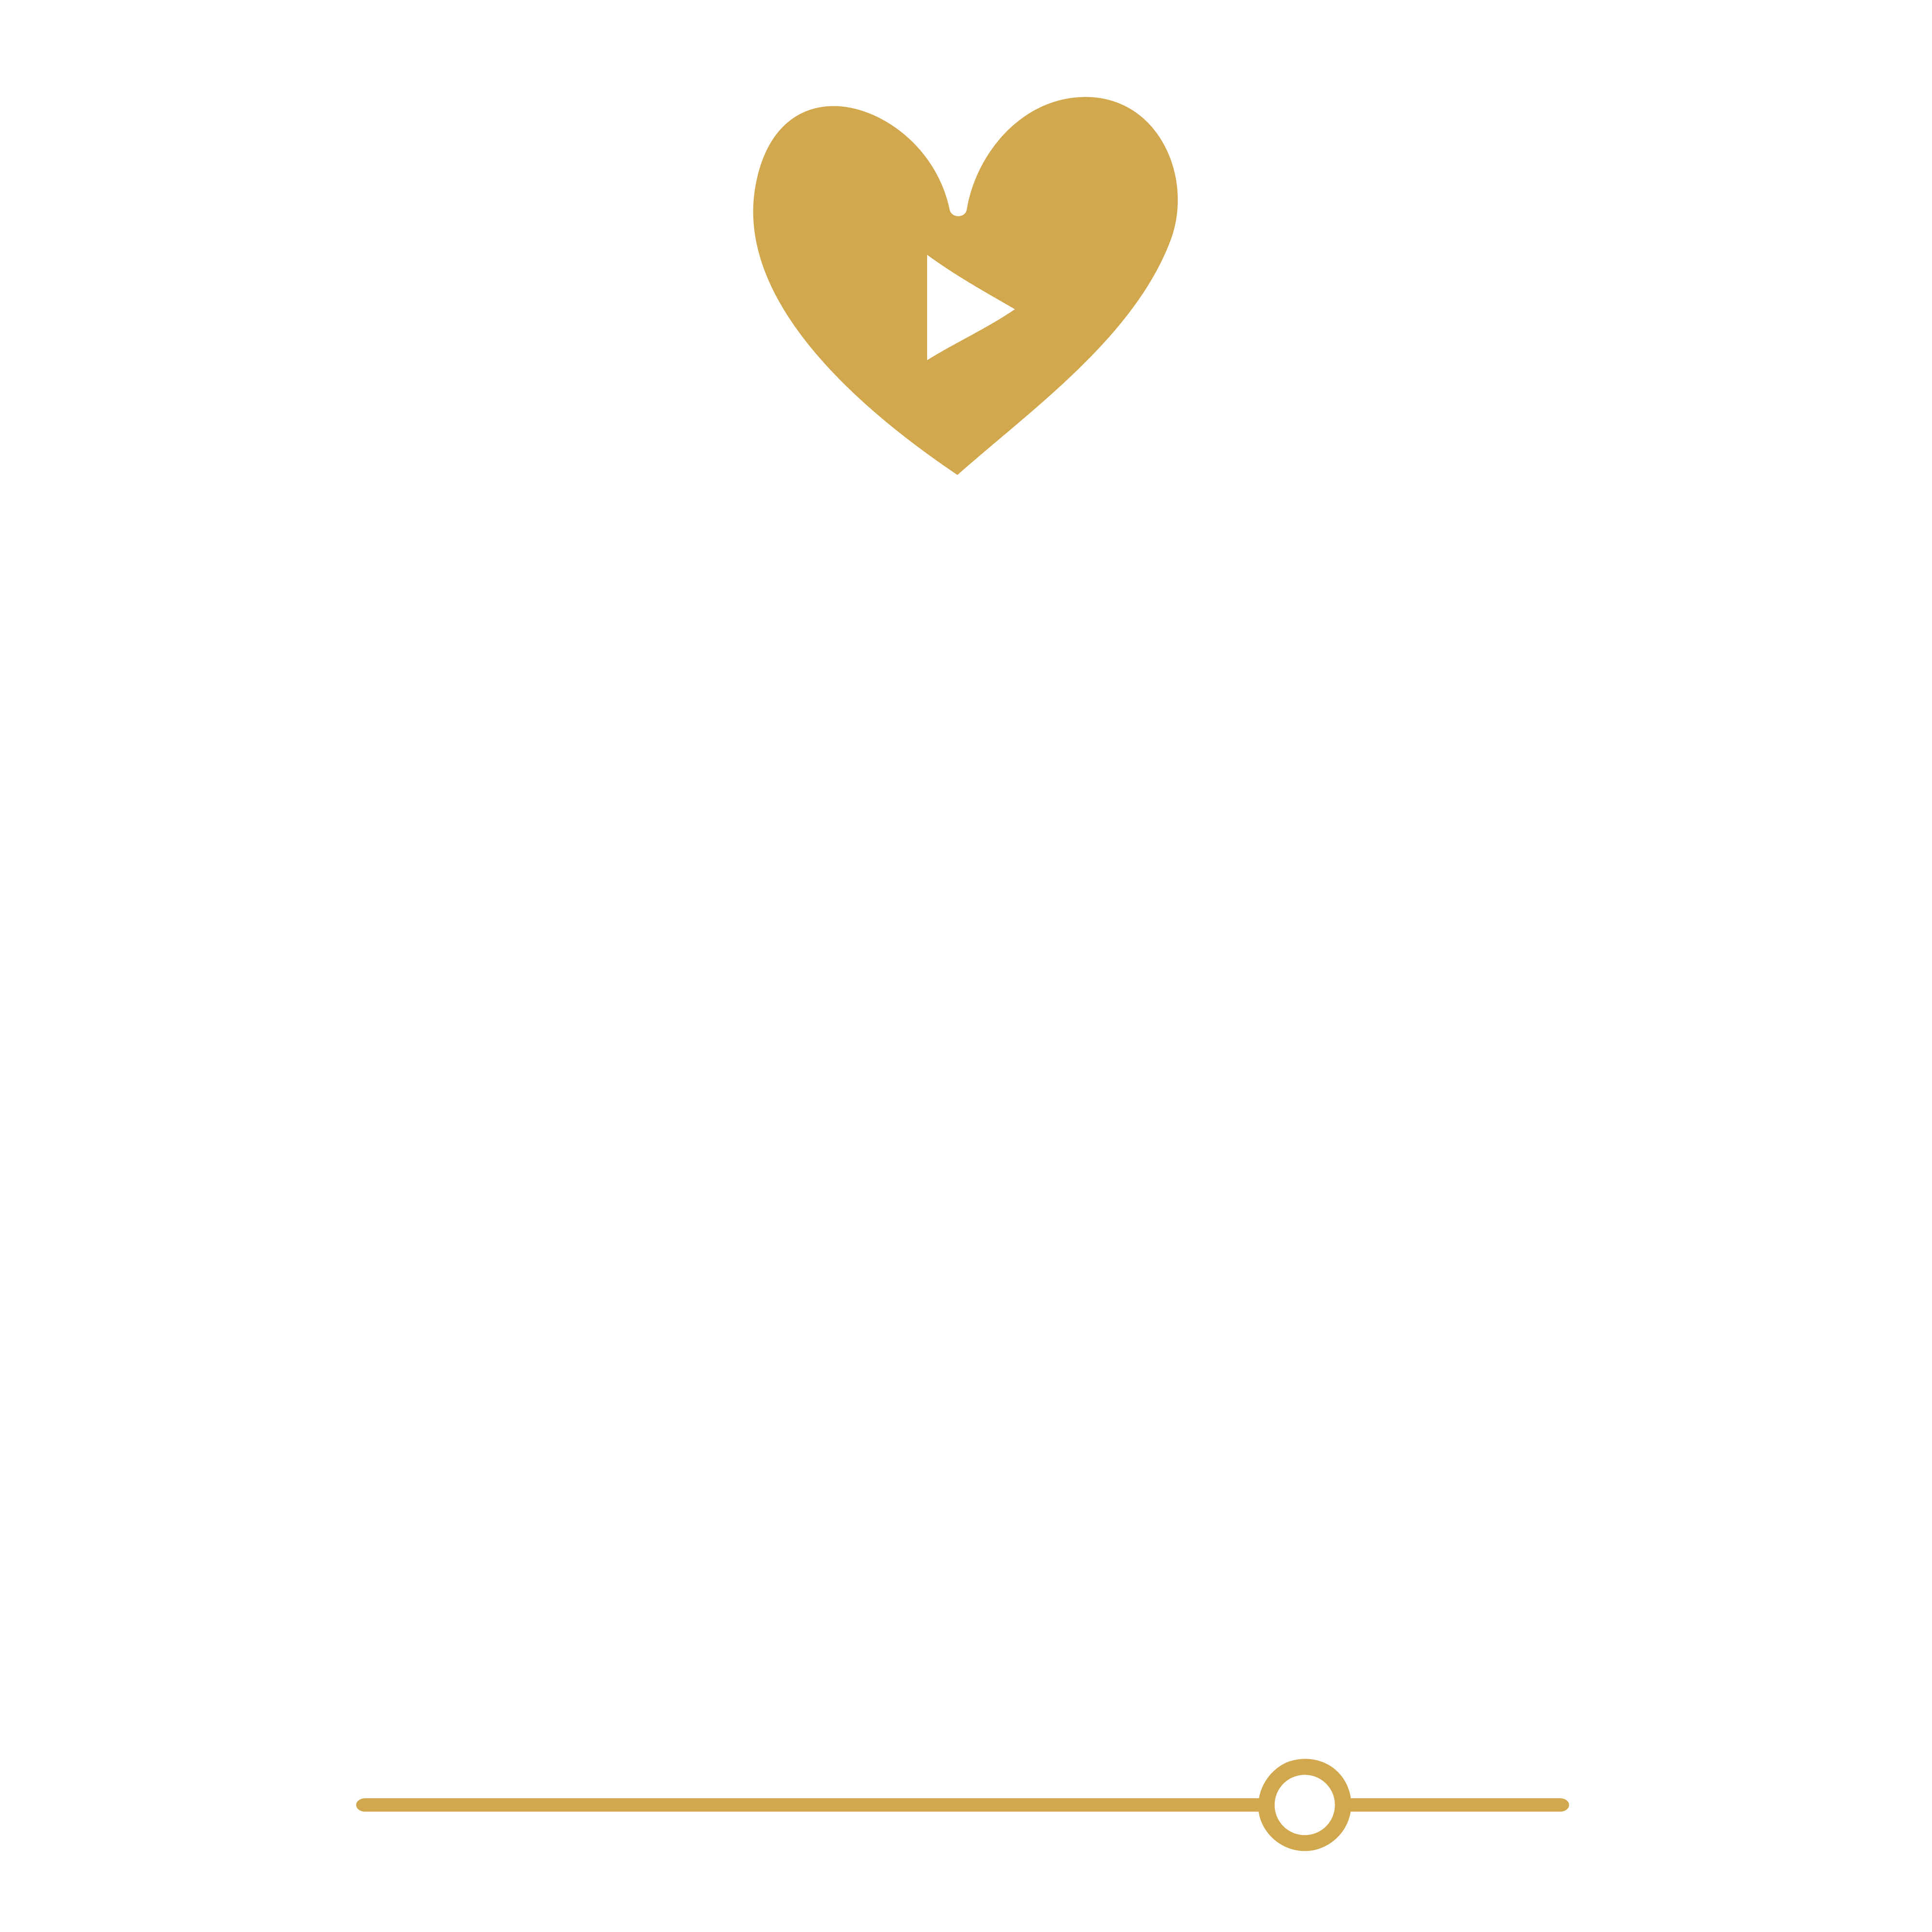 Vlog Visuals